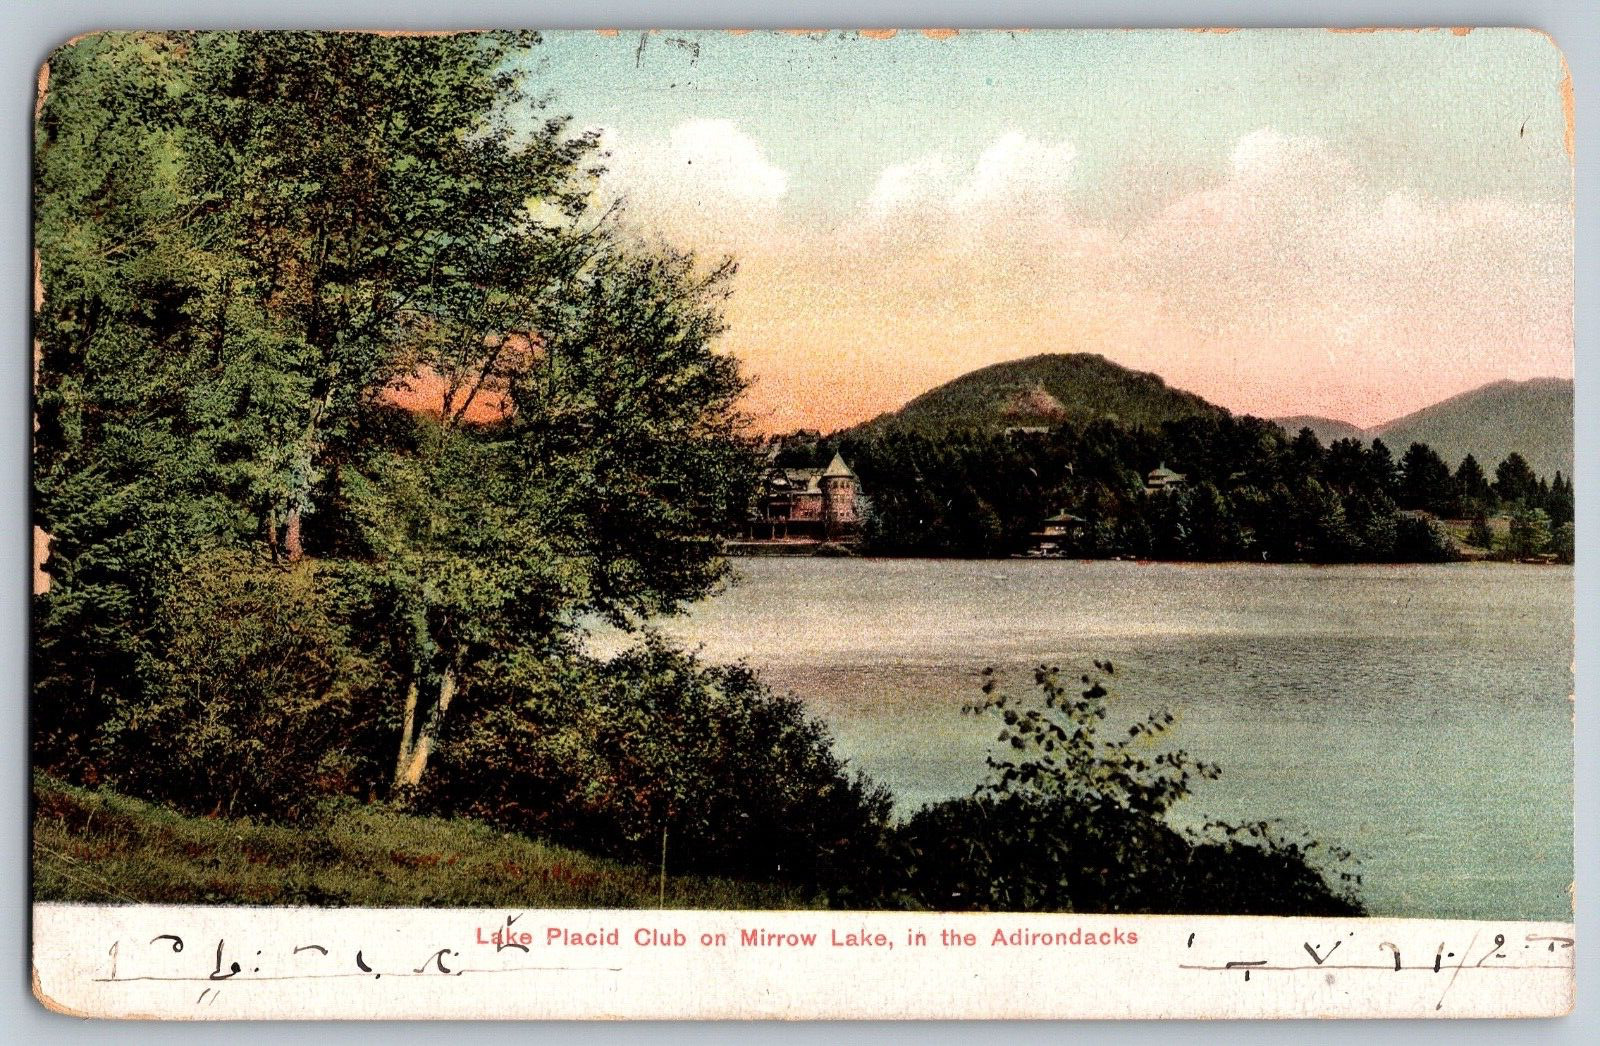 Lake Placid Club on Mirrow Lake - Adirondacks - Vintage Postcard - Posted